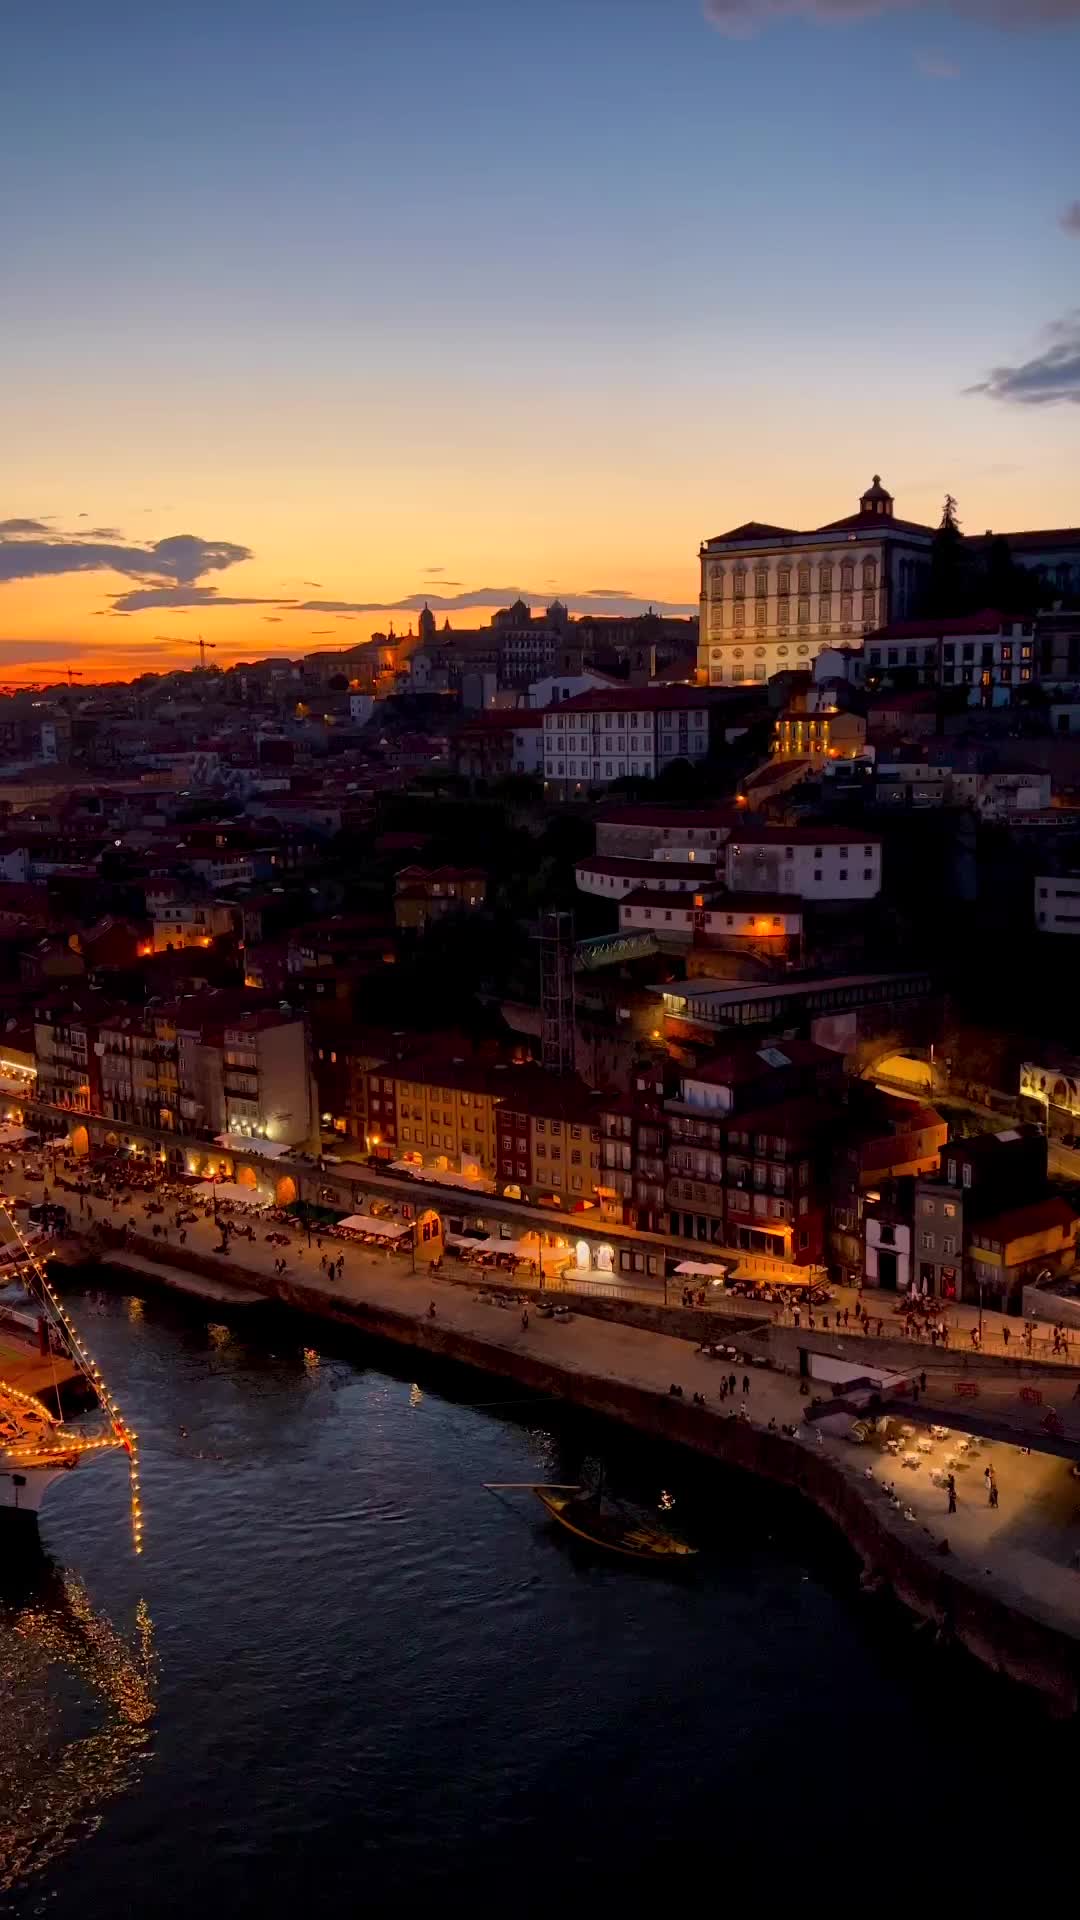 Evening Glow in Porto: Captivating Sunset Scenery